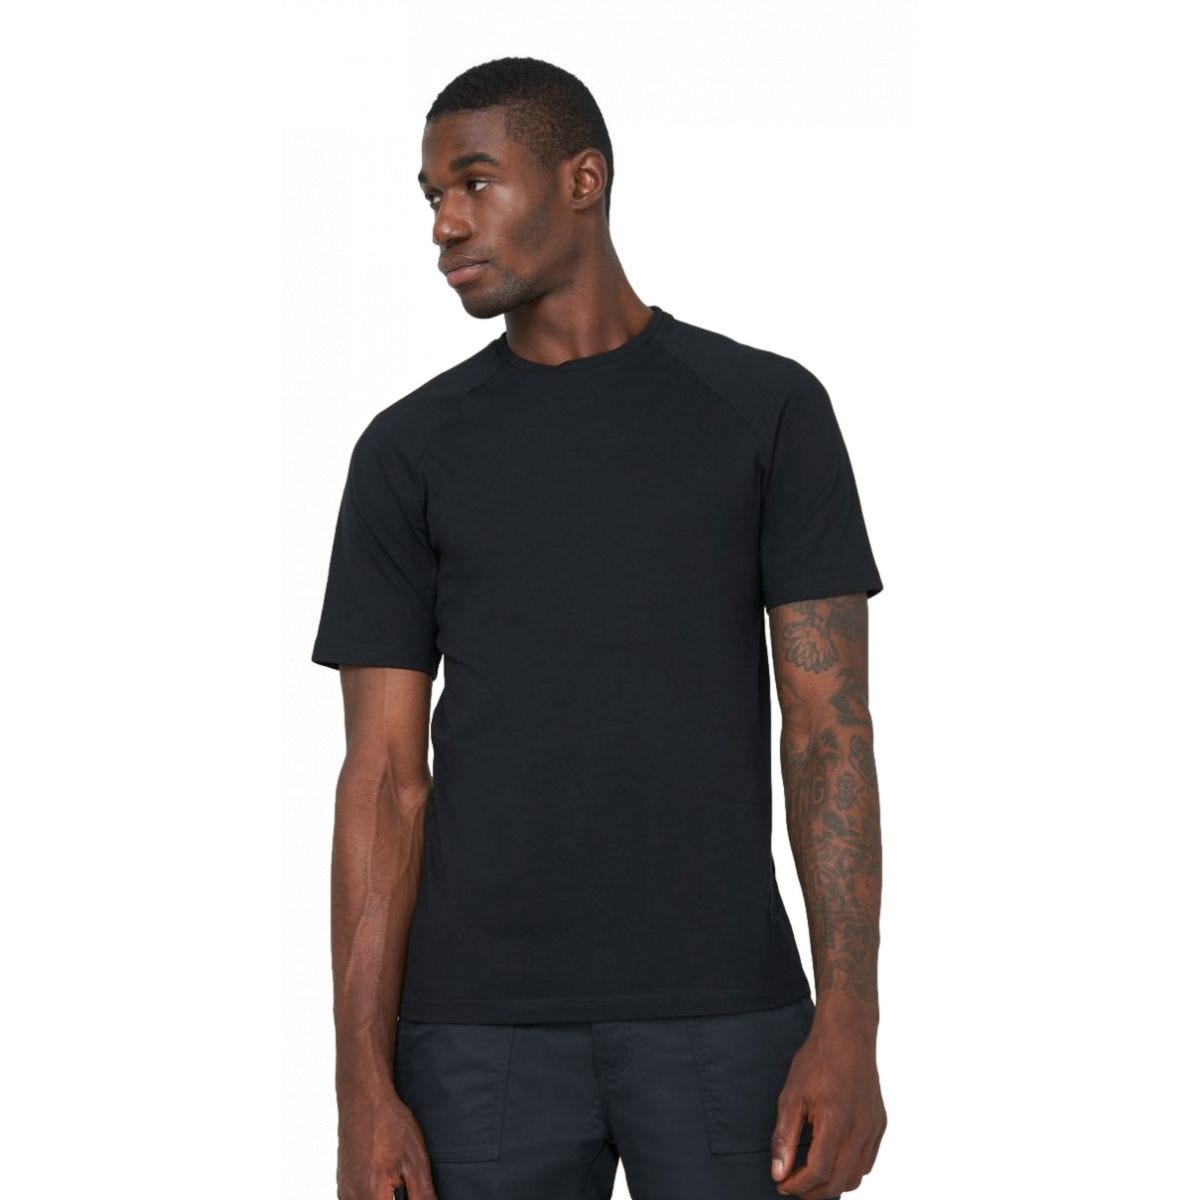 Tee-shirt Temp-IQ Noir - Dickies - Taille S 2